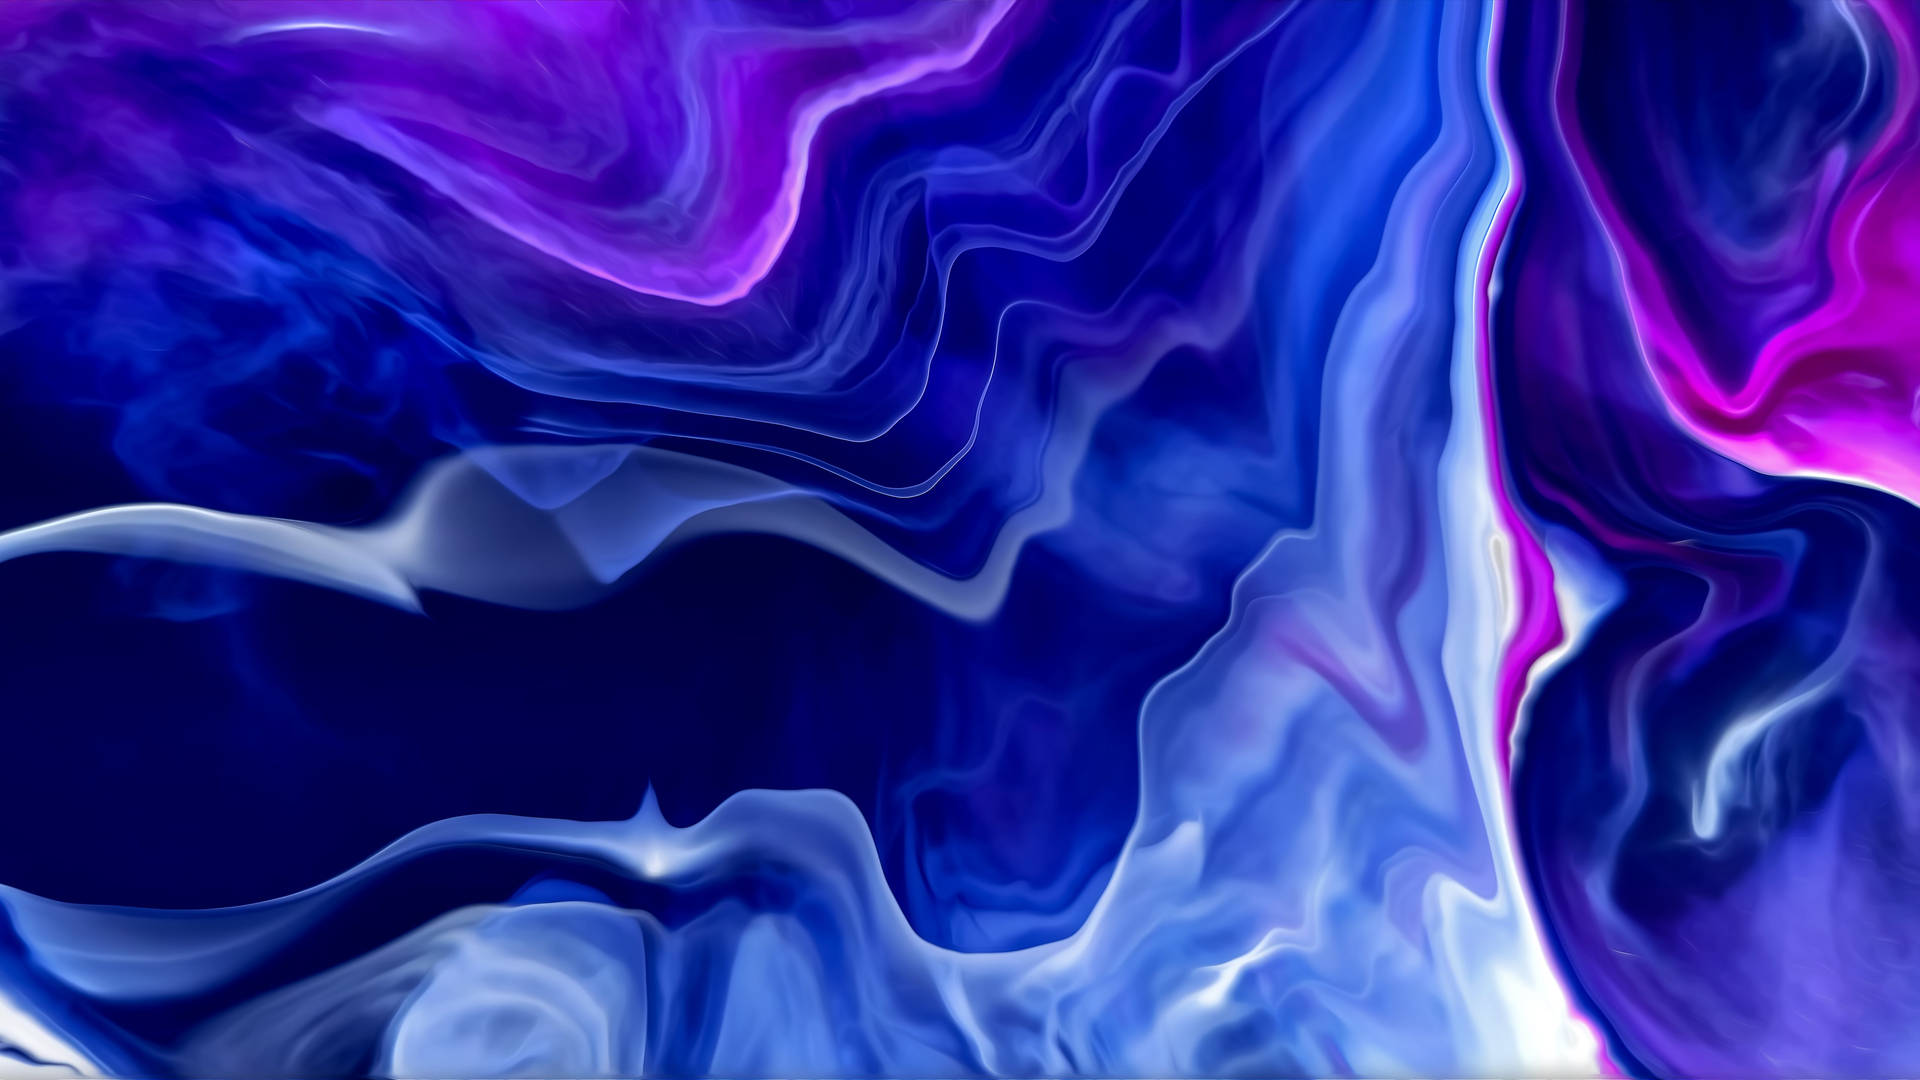 Blue And Pink Liquid Surface iMac 4K Wallpaper